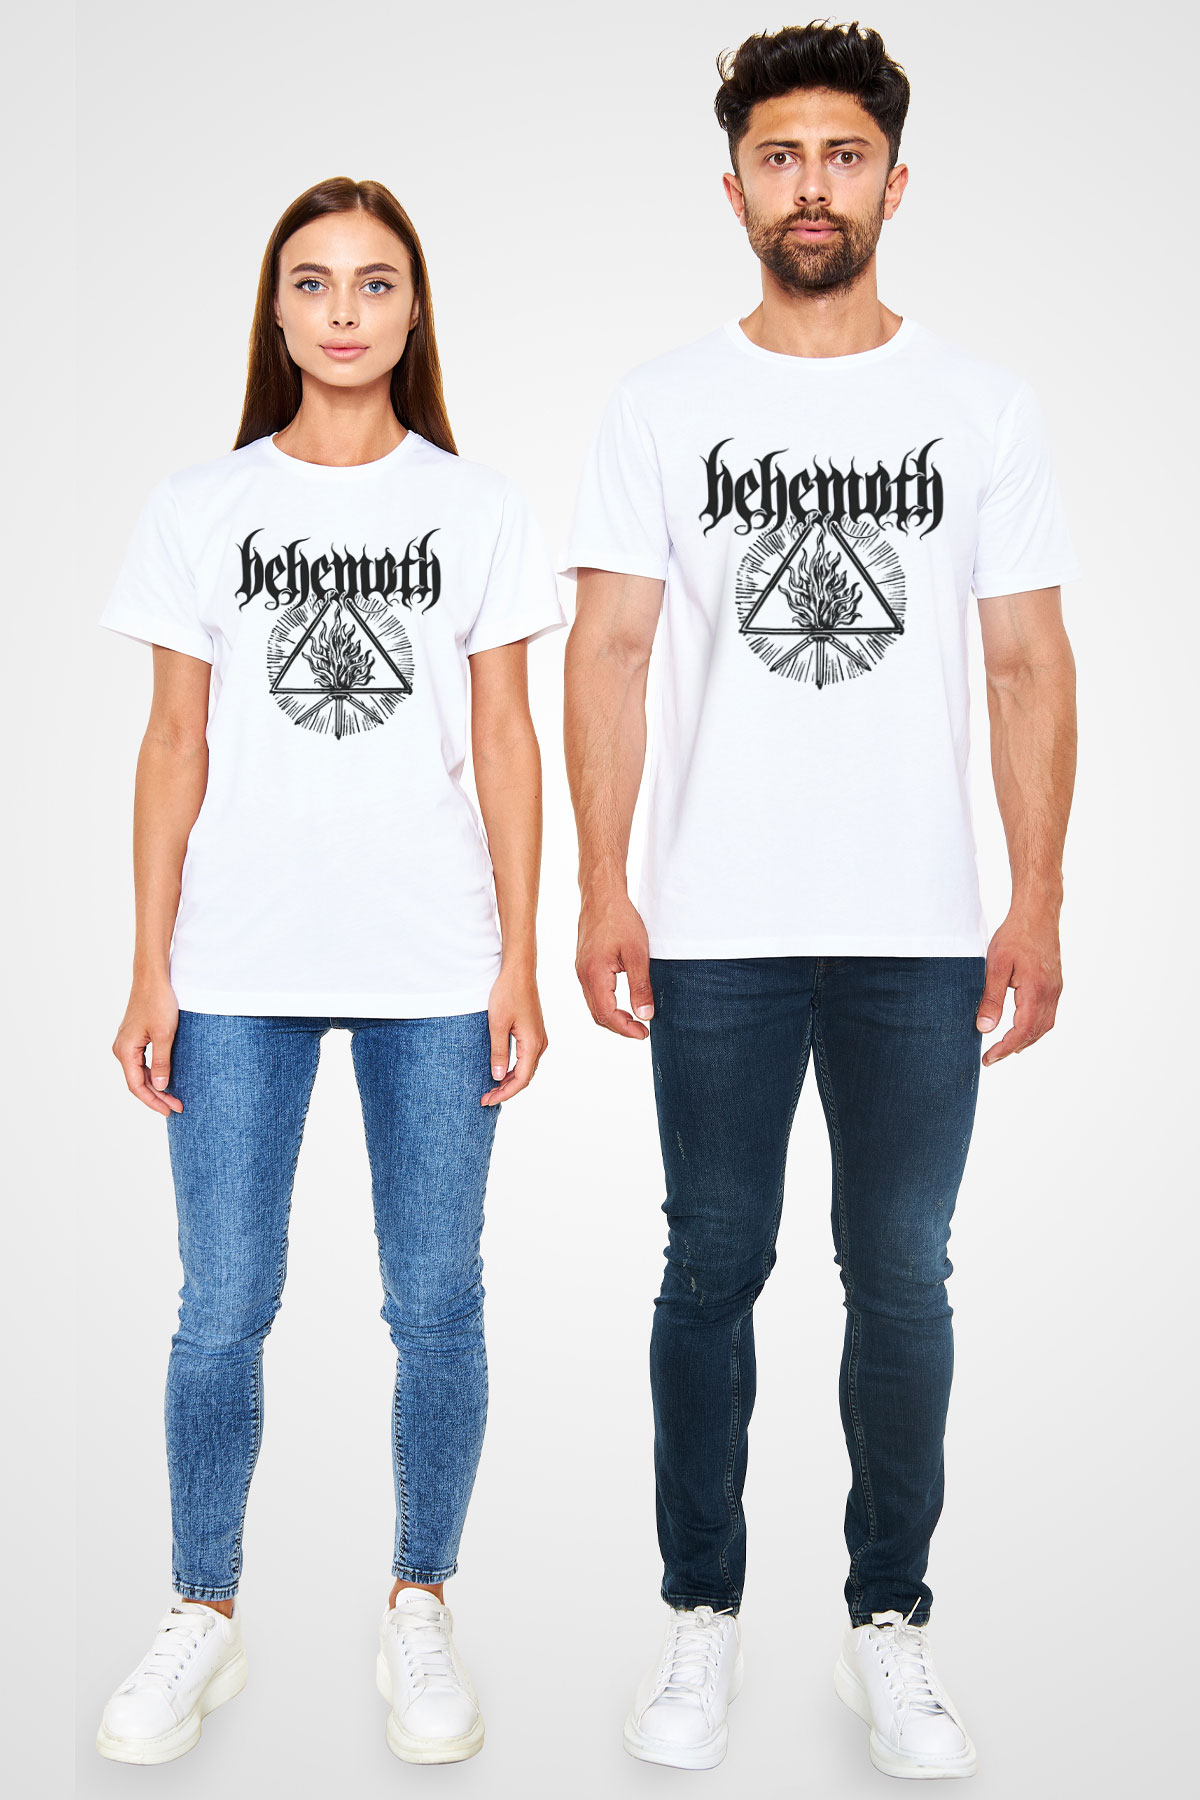 Behemoth White Unisex T-Shirt - Tees - Shirts